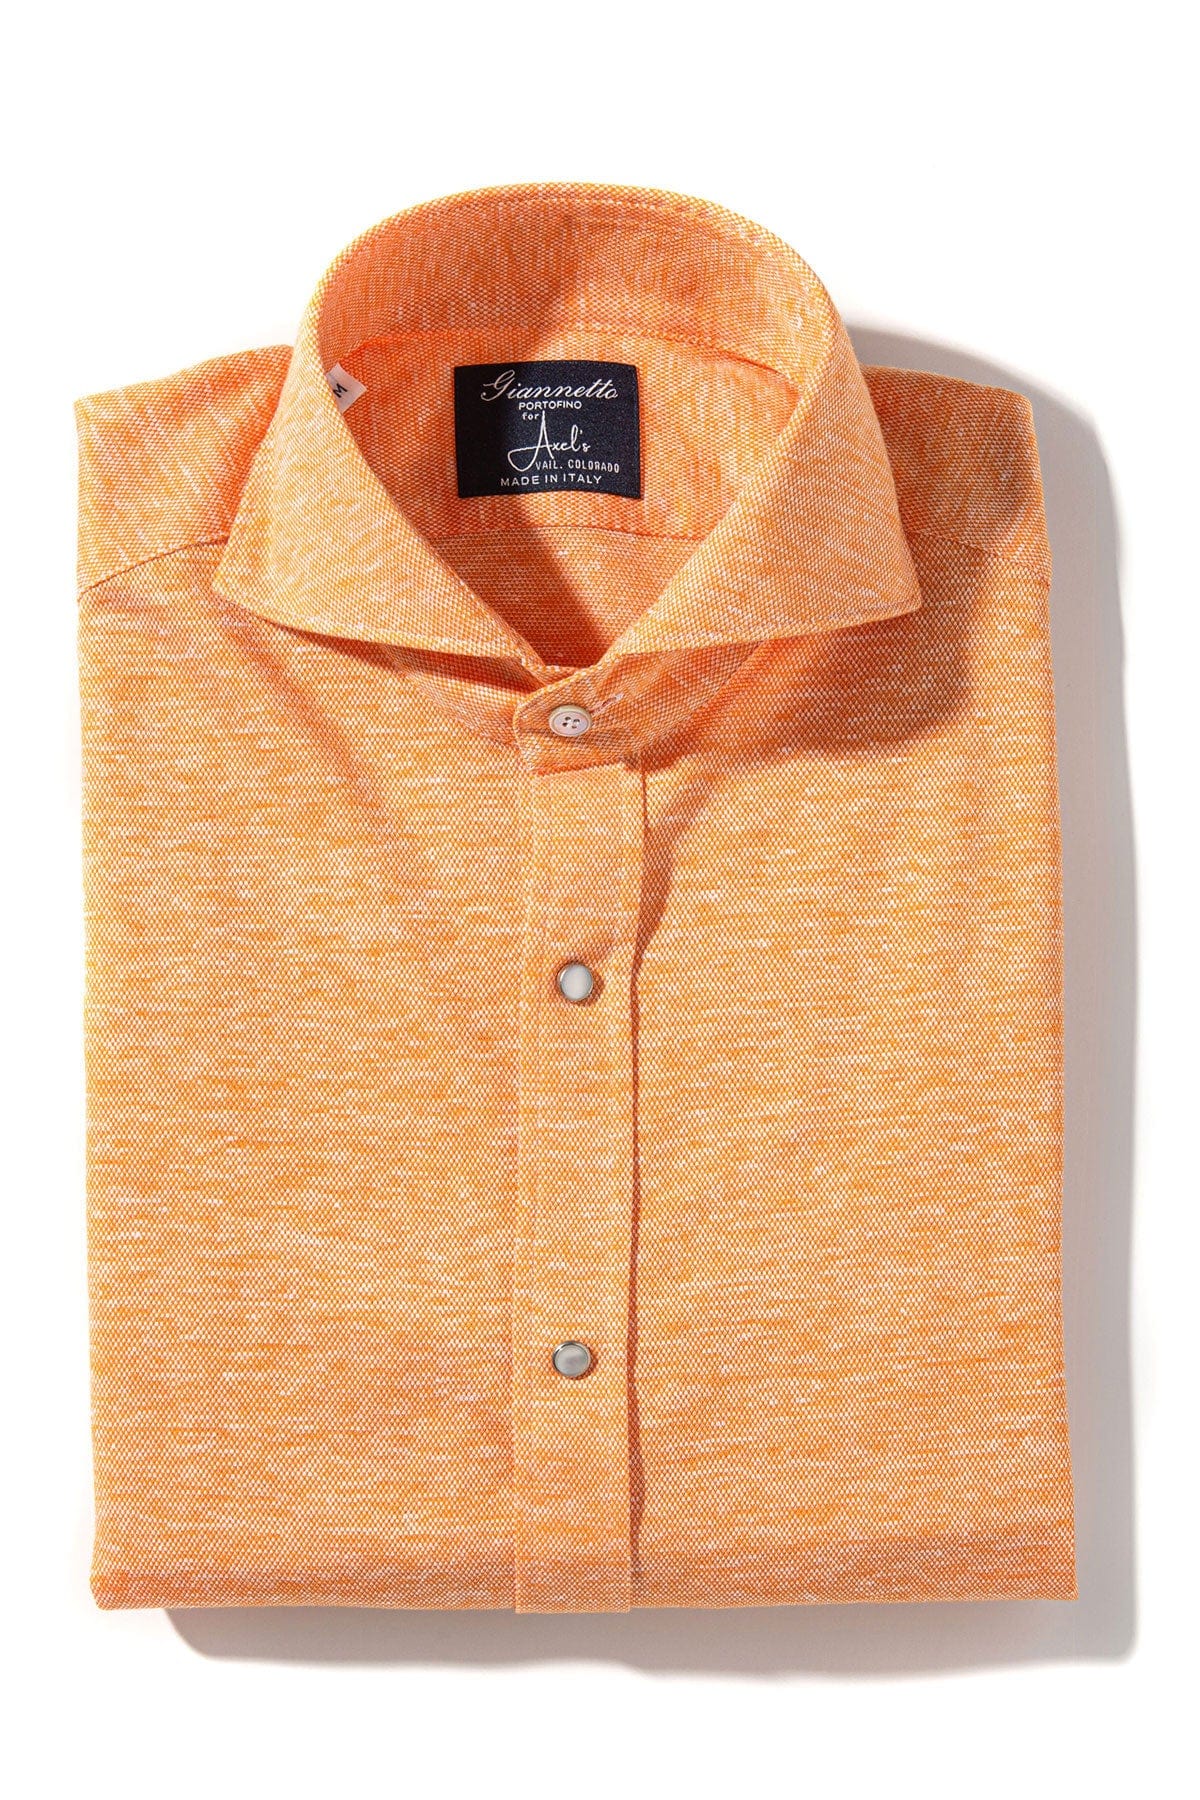 Schwinn Cotton Linen Shirt in Orange - AXEL'S